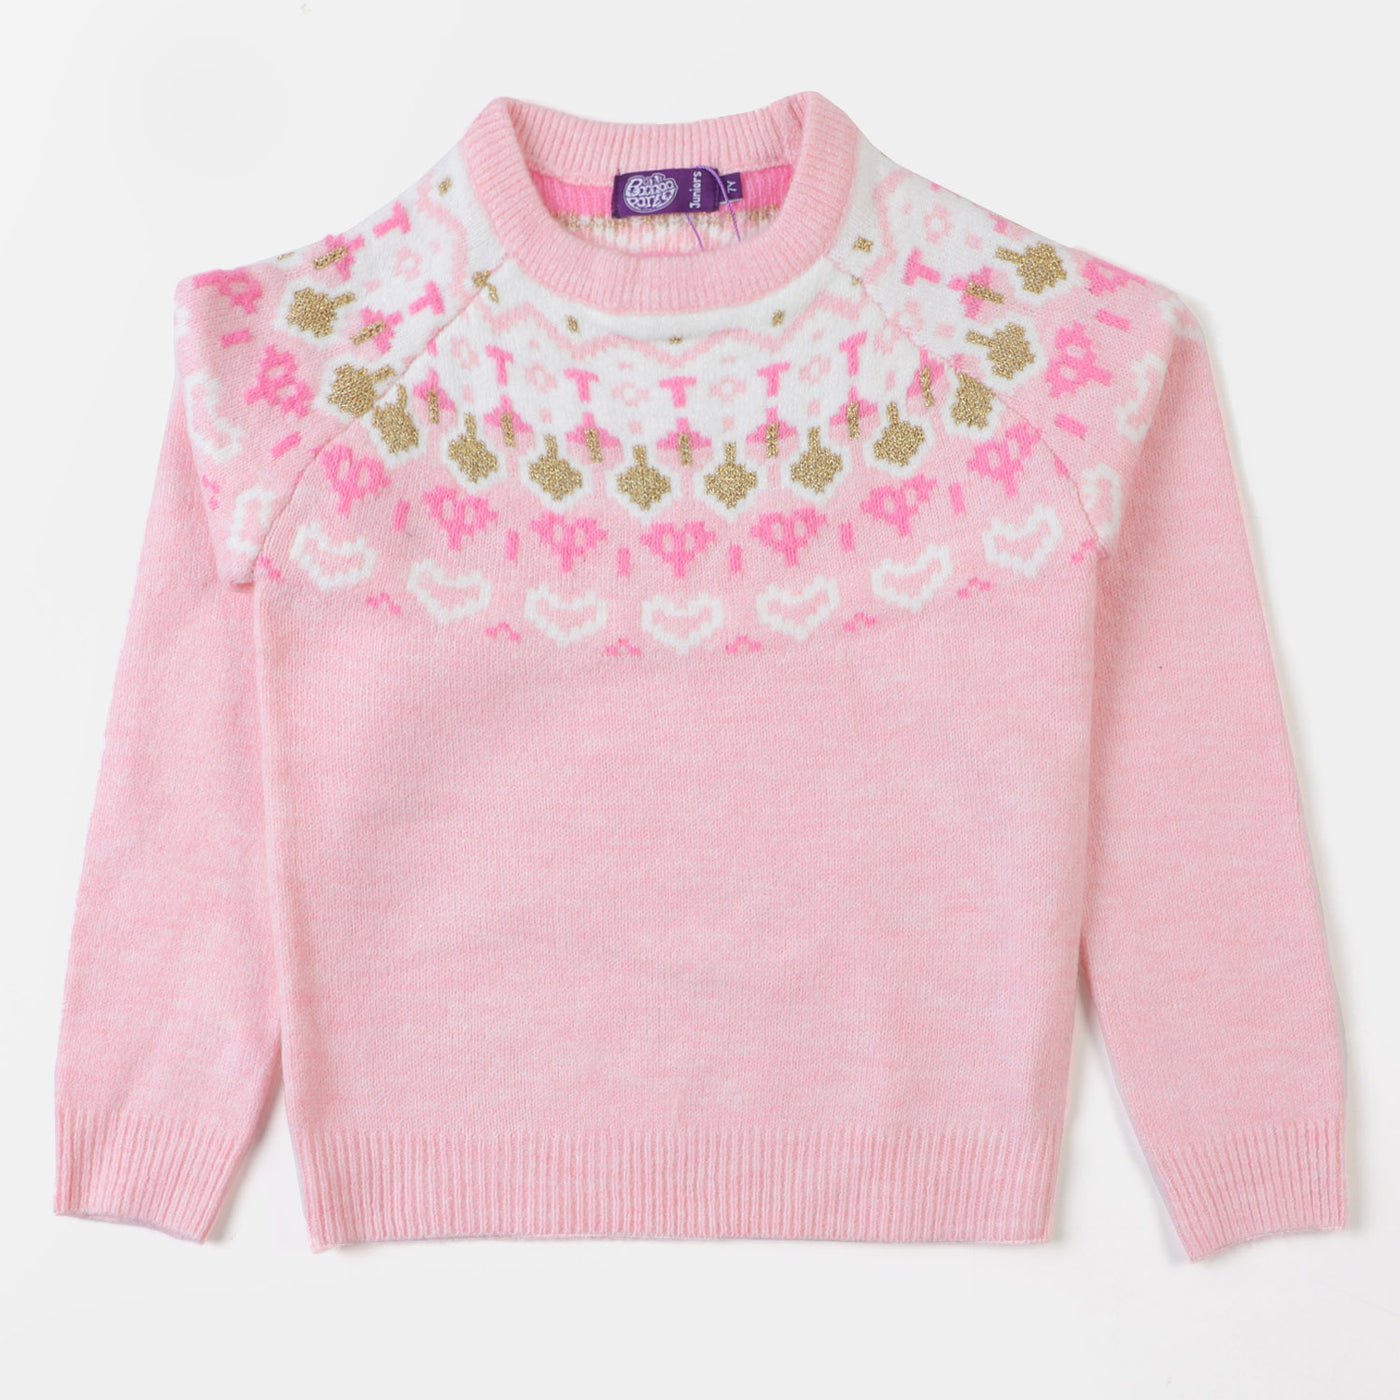 Girls Sweater - Pink